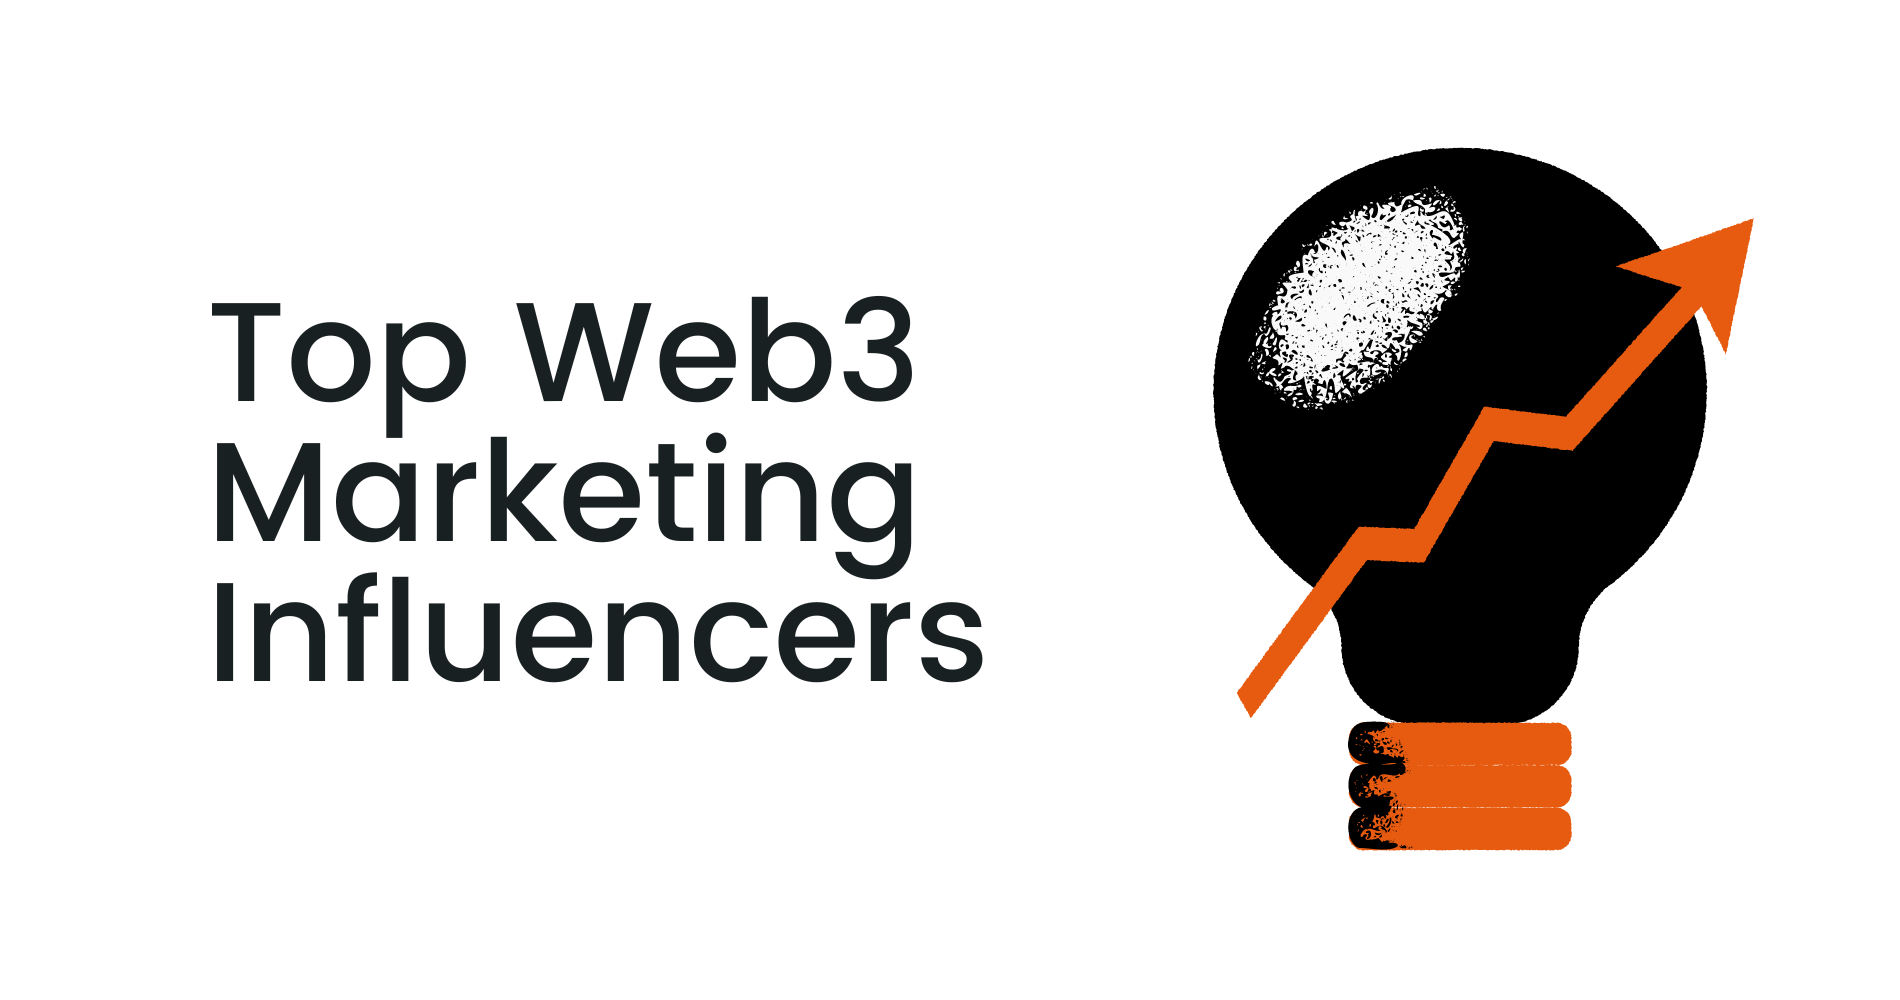 Top Web3 Marketing Influencers